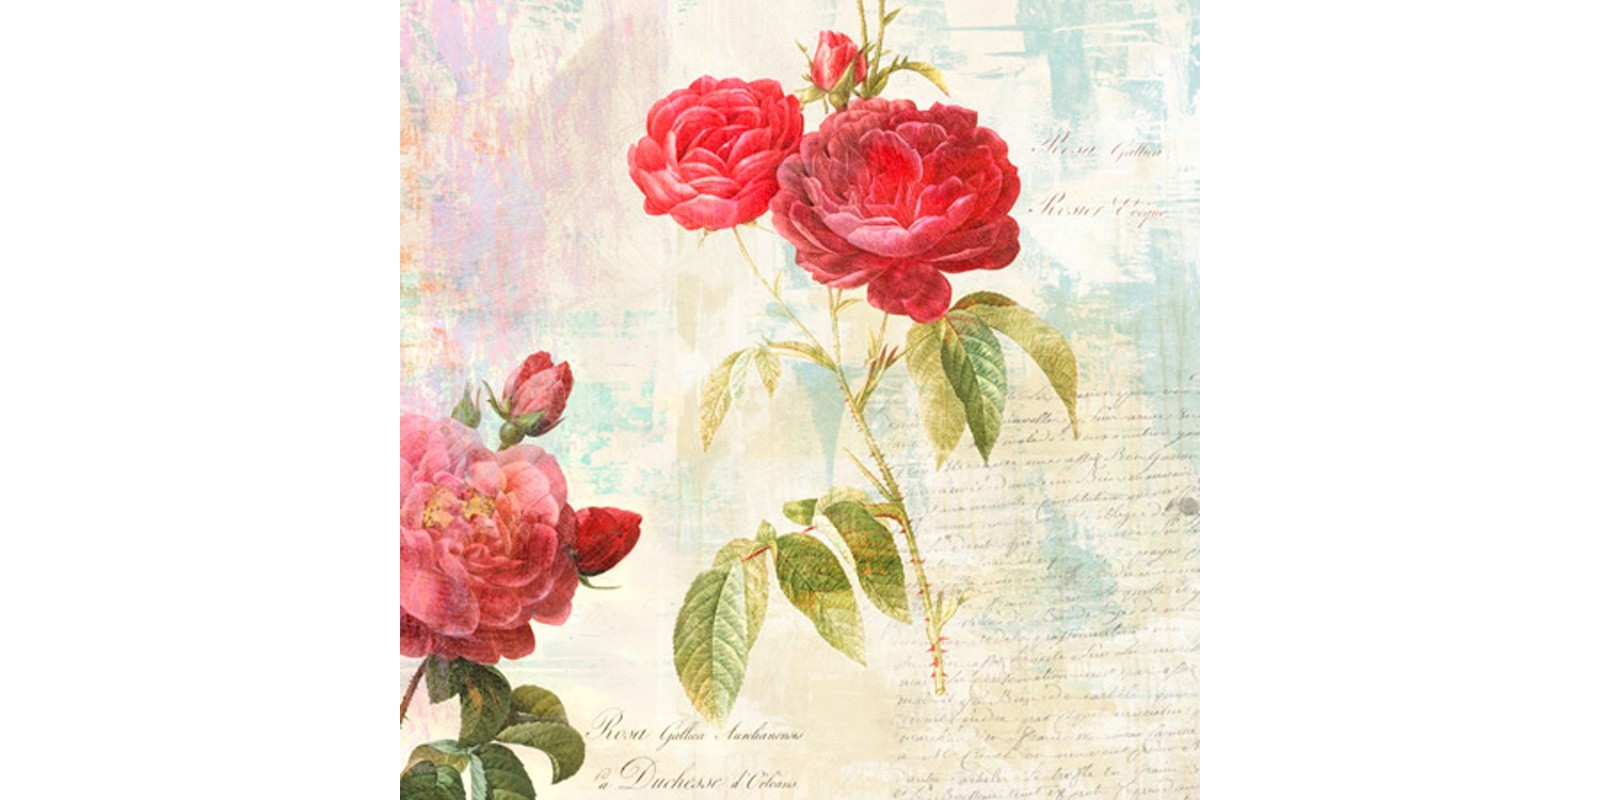 Eric Chestier - Redouté's Roses 2.0 - II